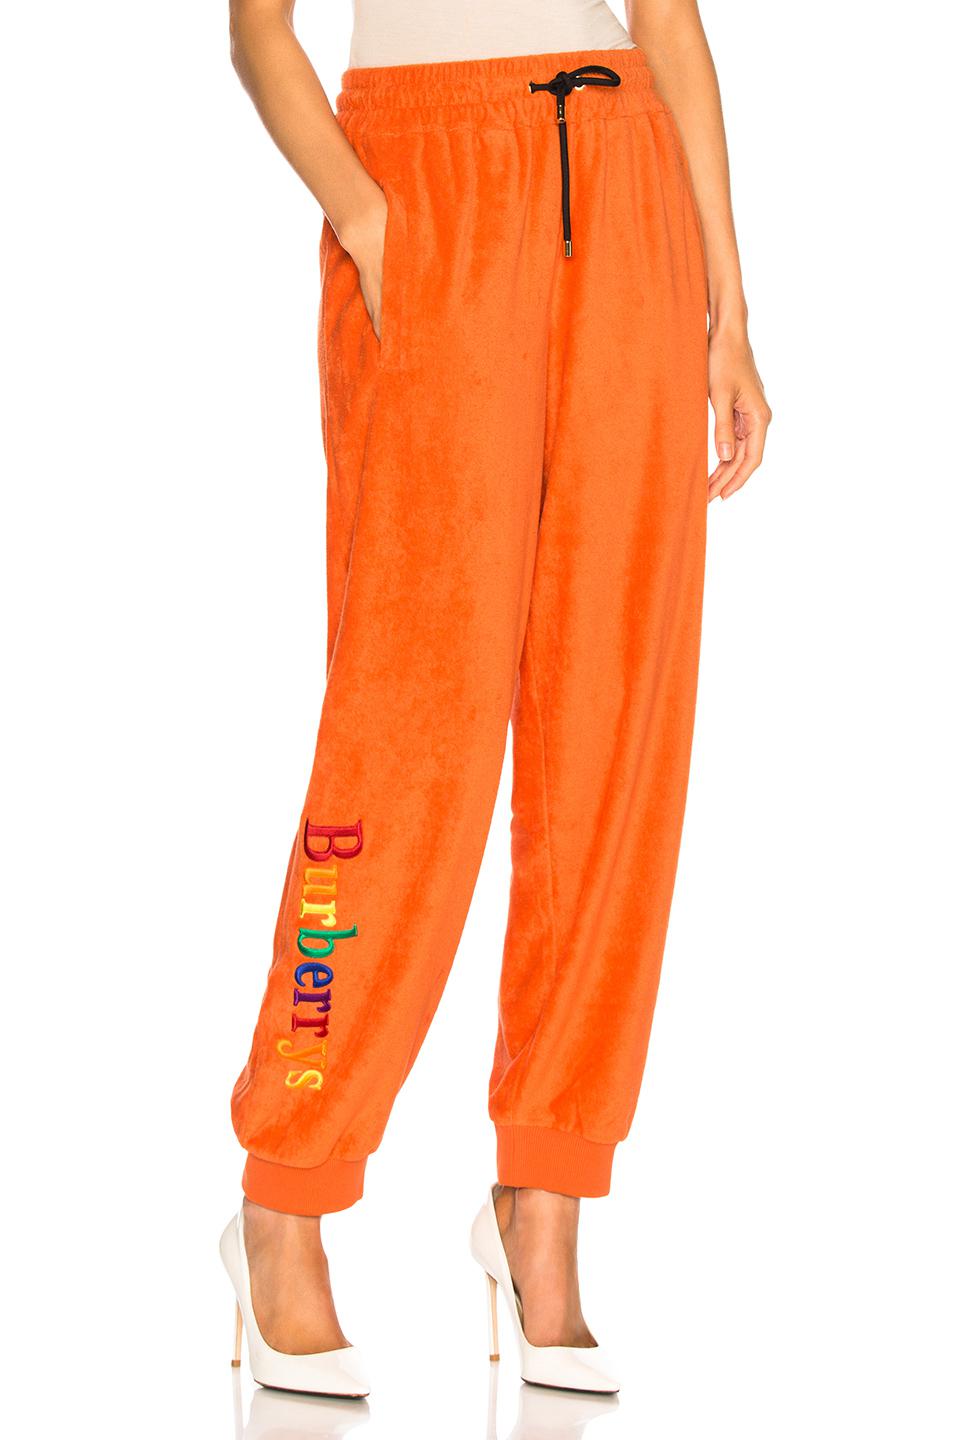 Burberry Rainbow Logo Sweatpants in Tangerine (Orange) - Lyst